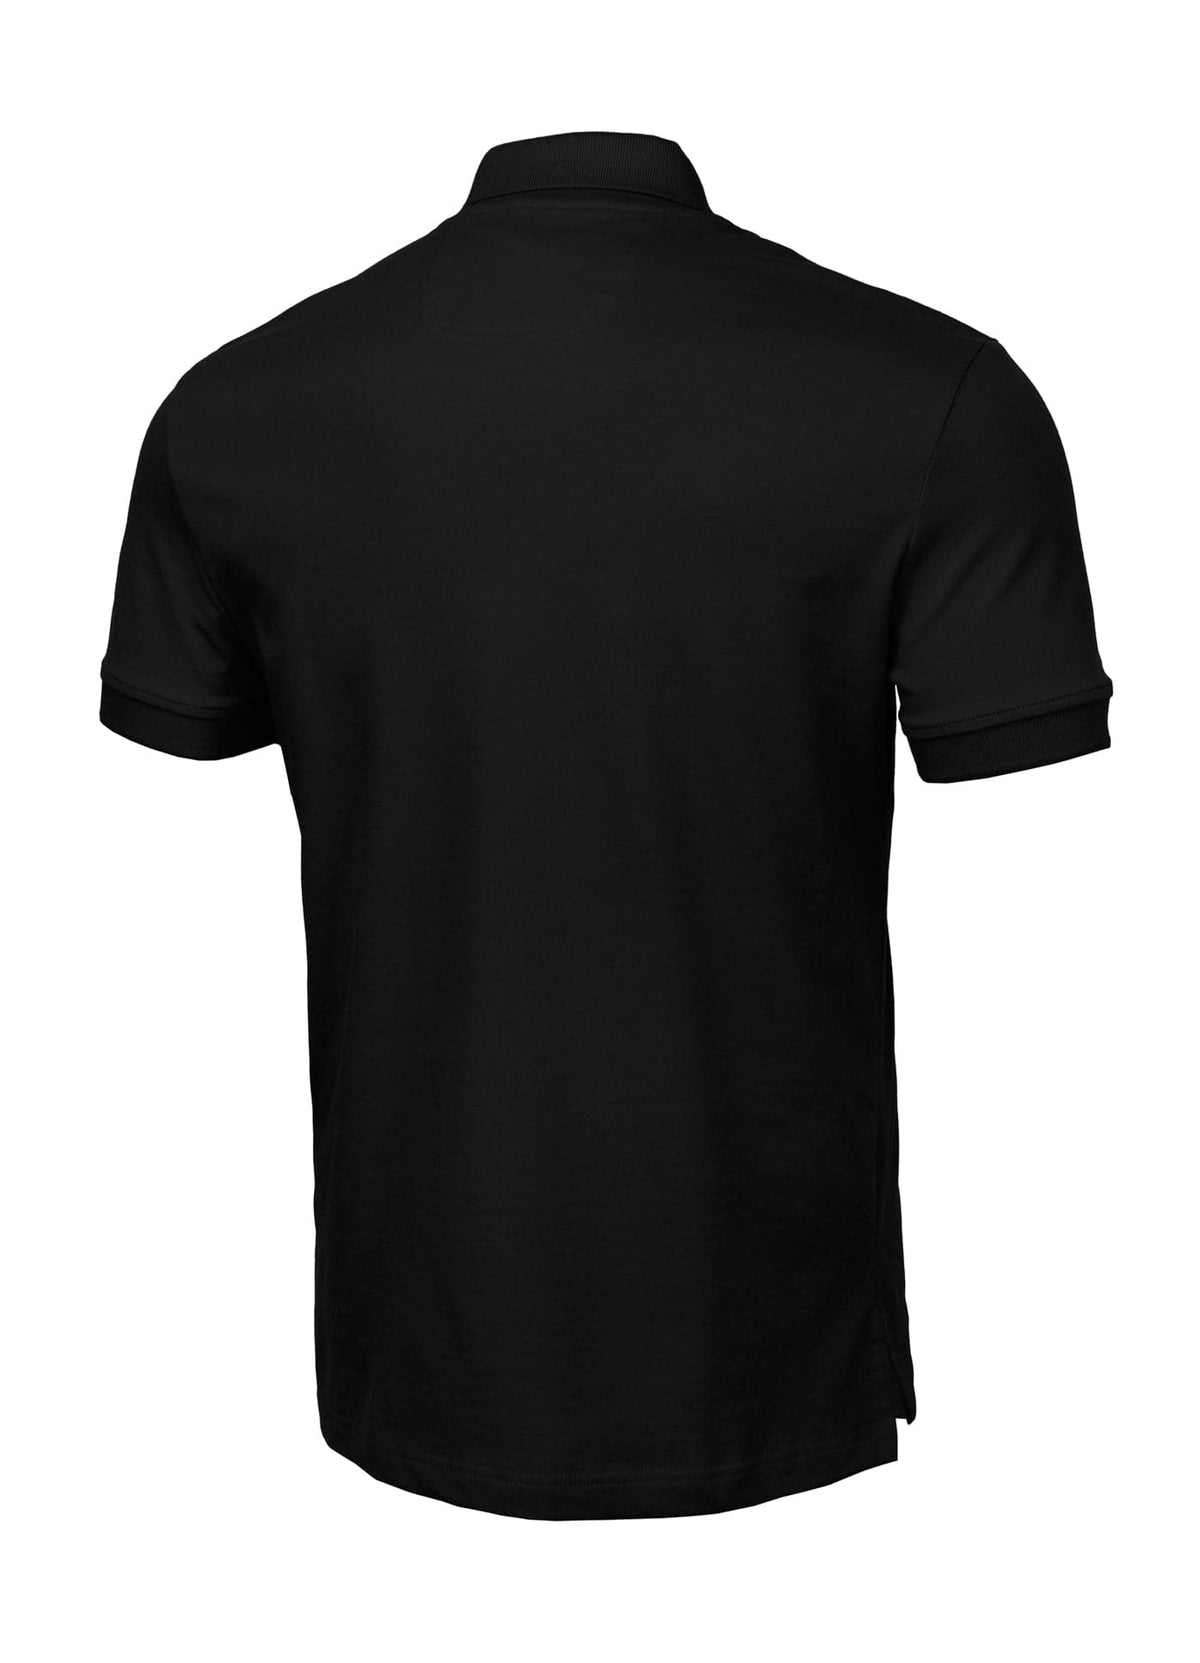 PIQUE REGULAR Black Polo T-shirt